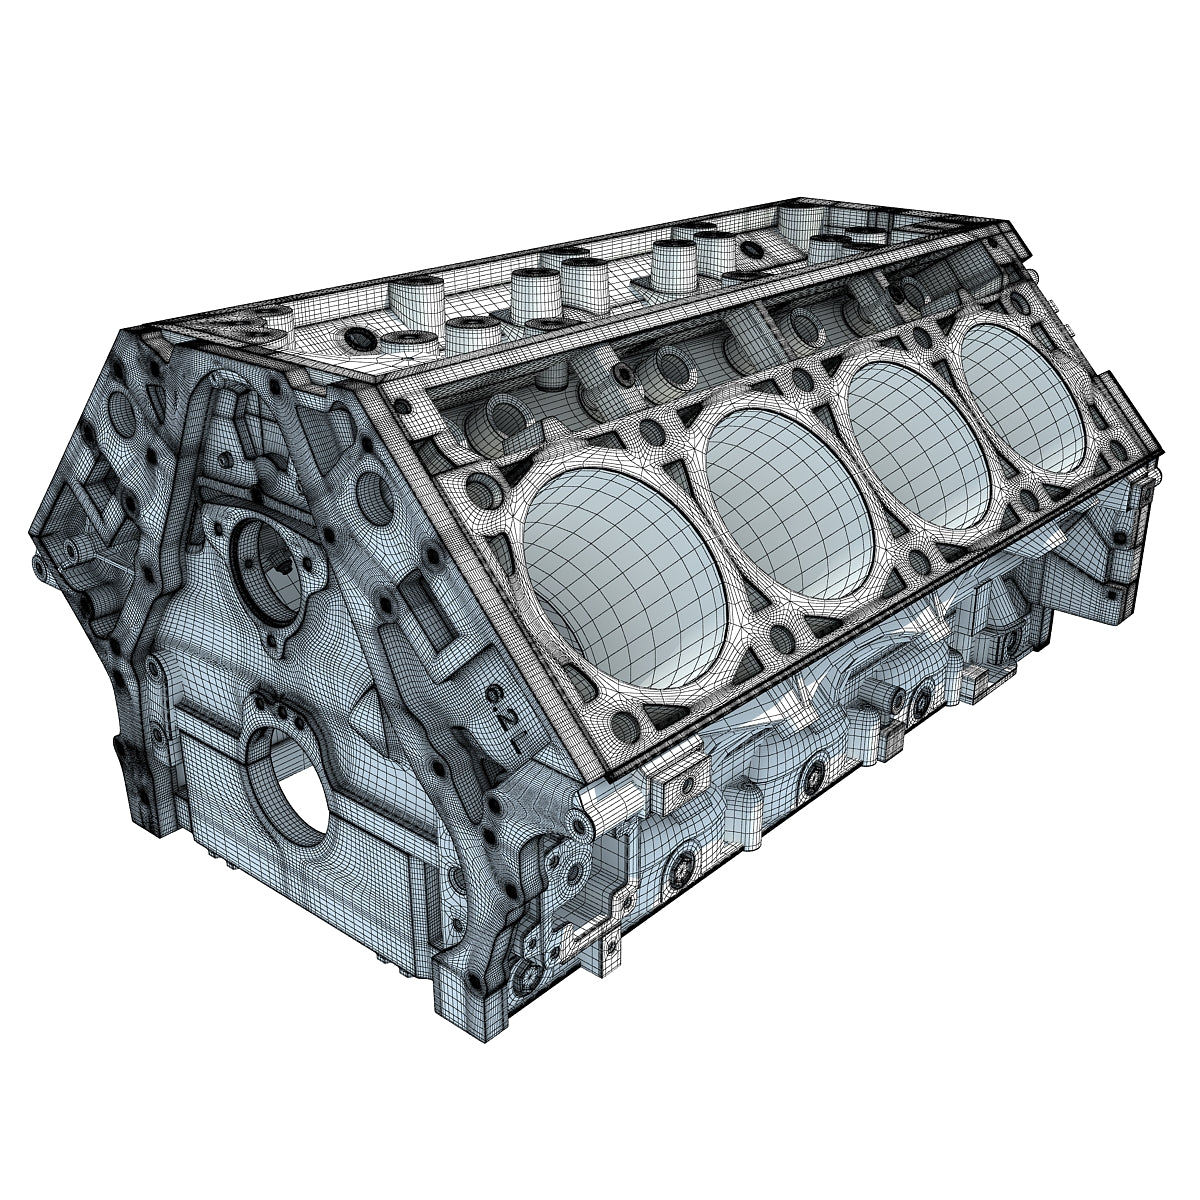 3D Engine Parts Models